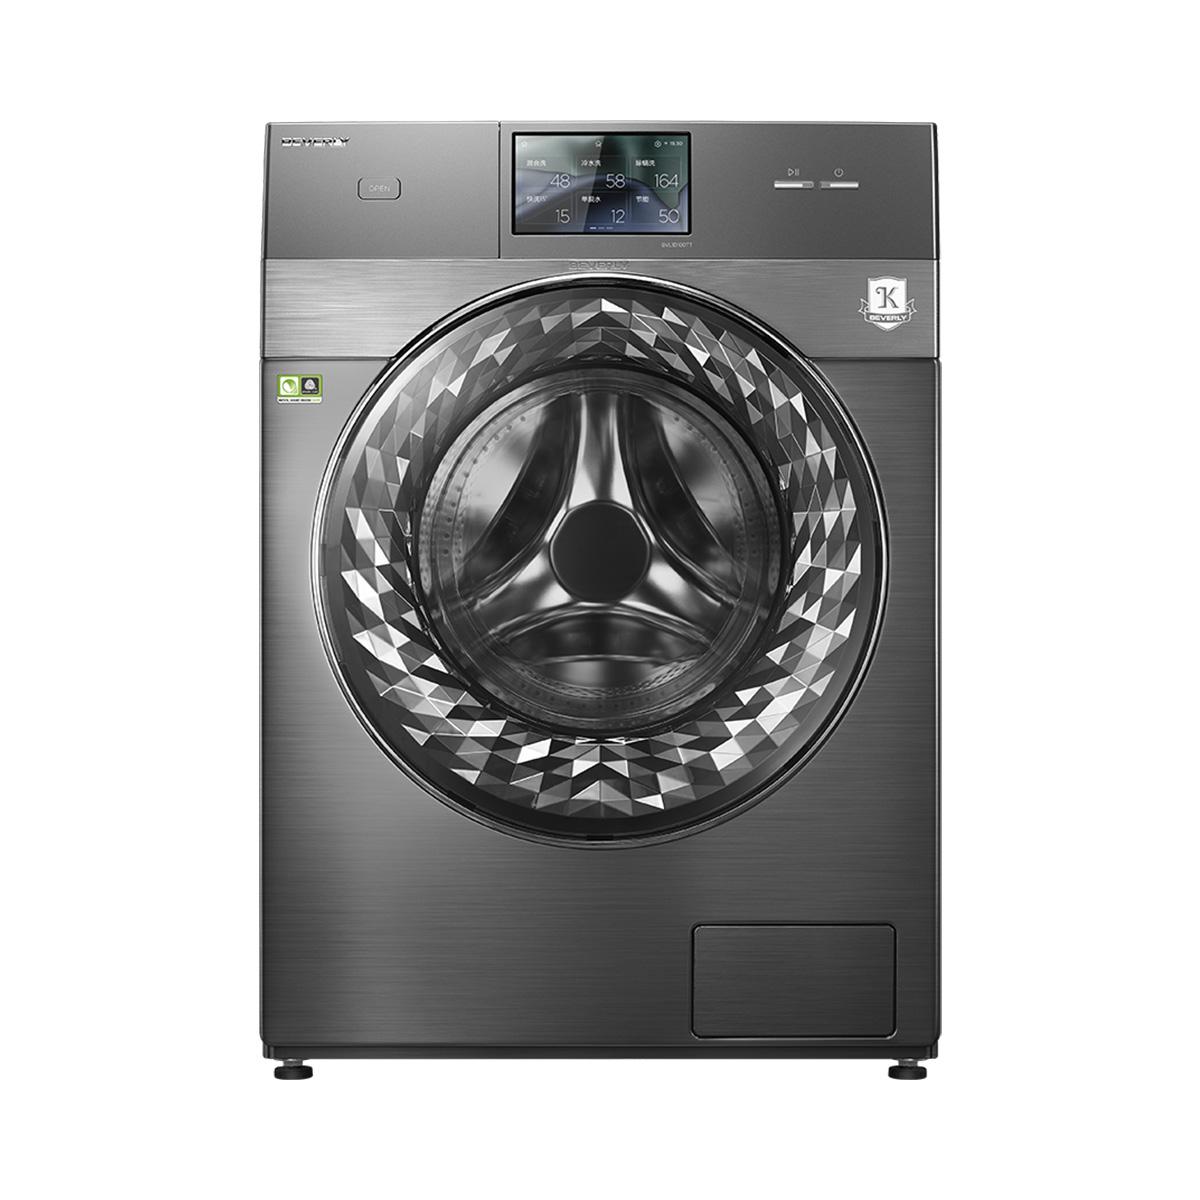 BEVERLY/比佛利 BVL1D100TT洗衣机 说明书.pdf